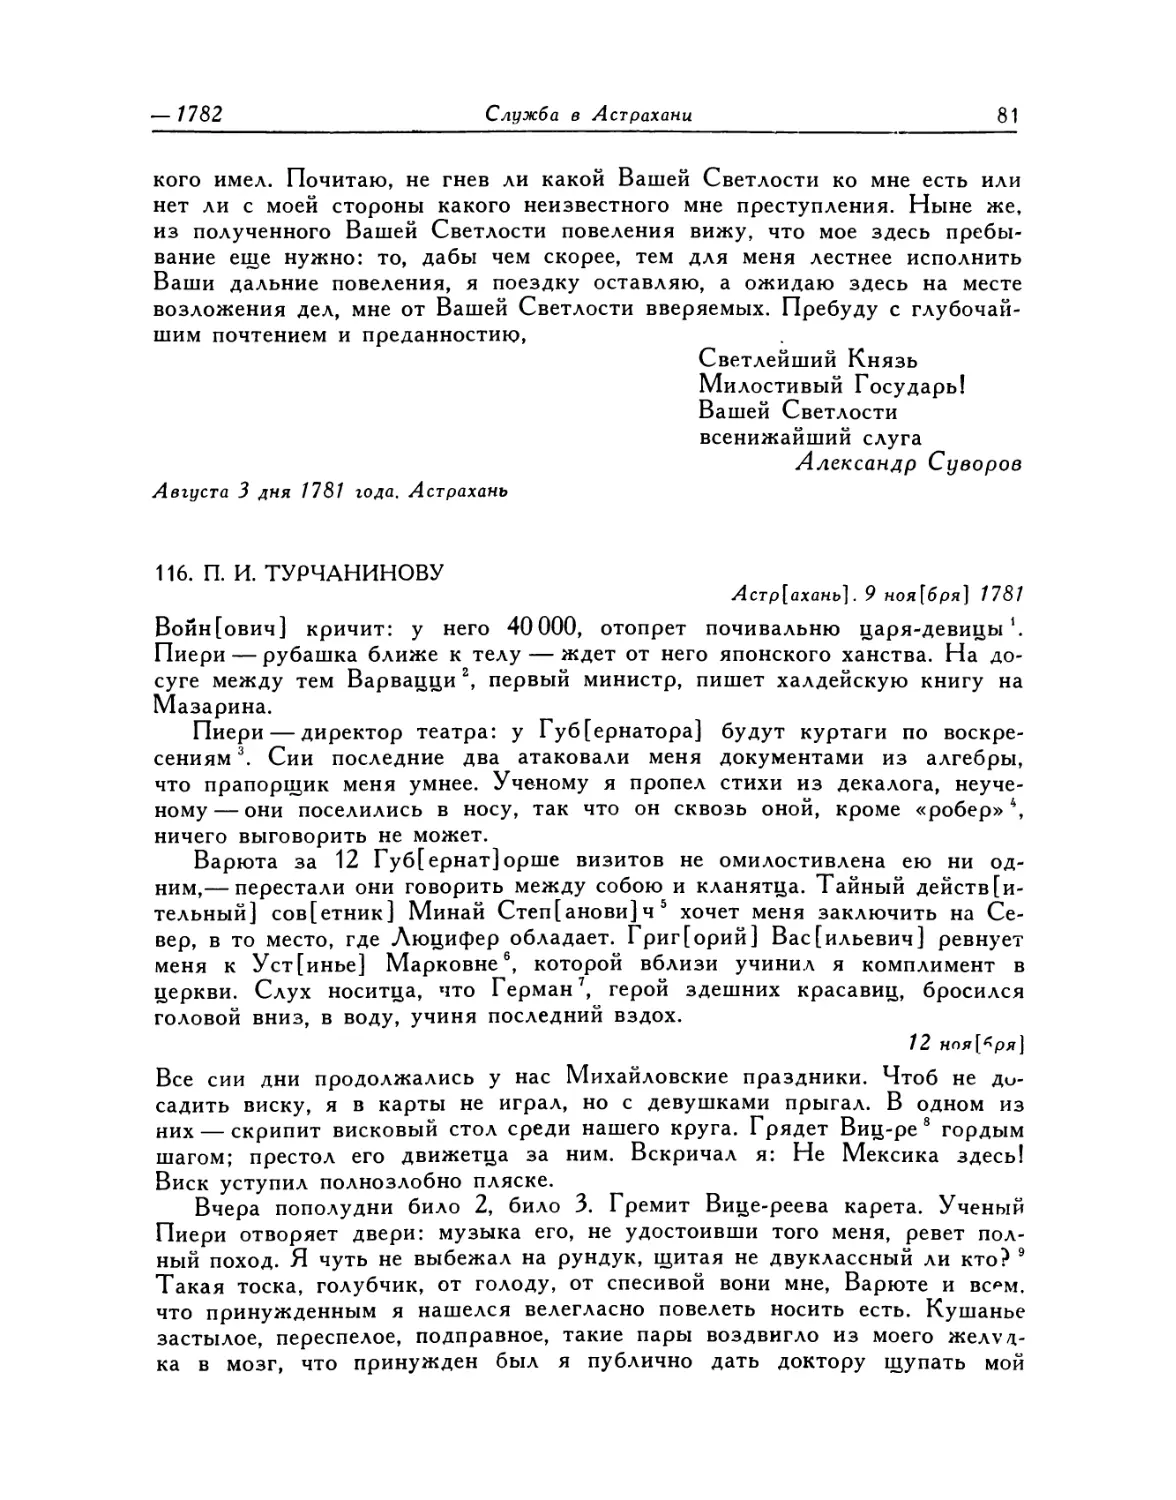 116. П.И.Турчанинову. 9.XI.—15.XI.1781